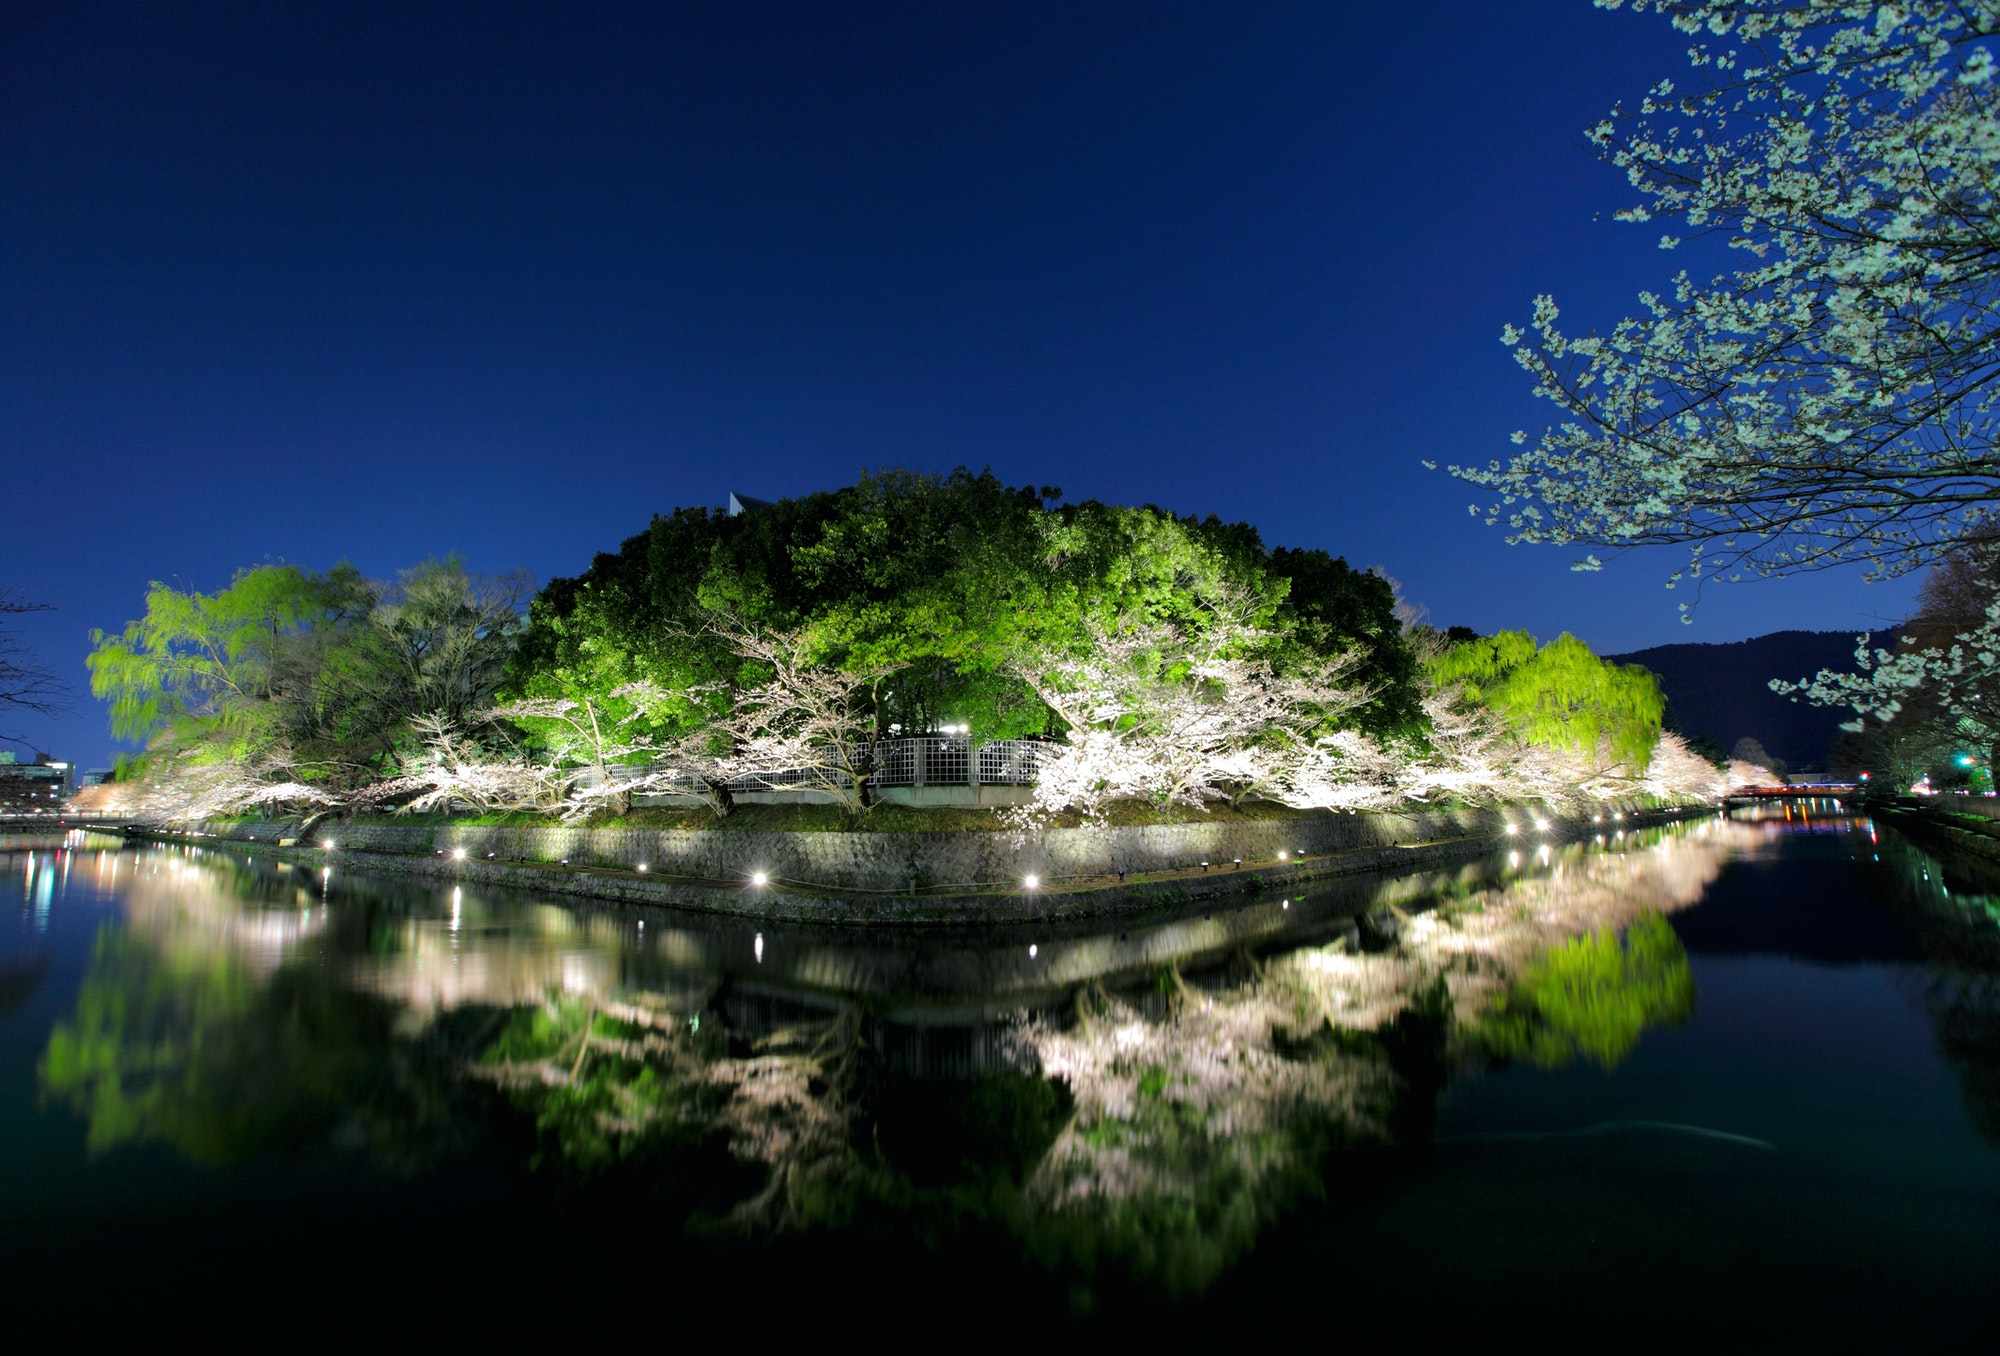 Biwa lake canal in Japan at night